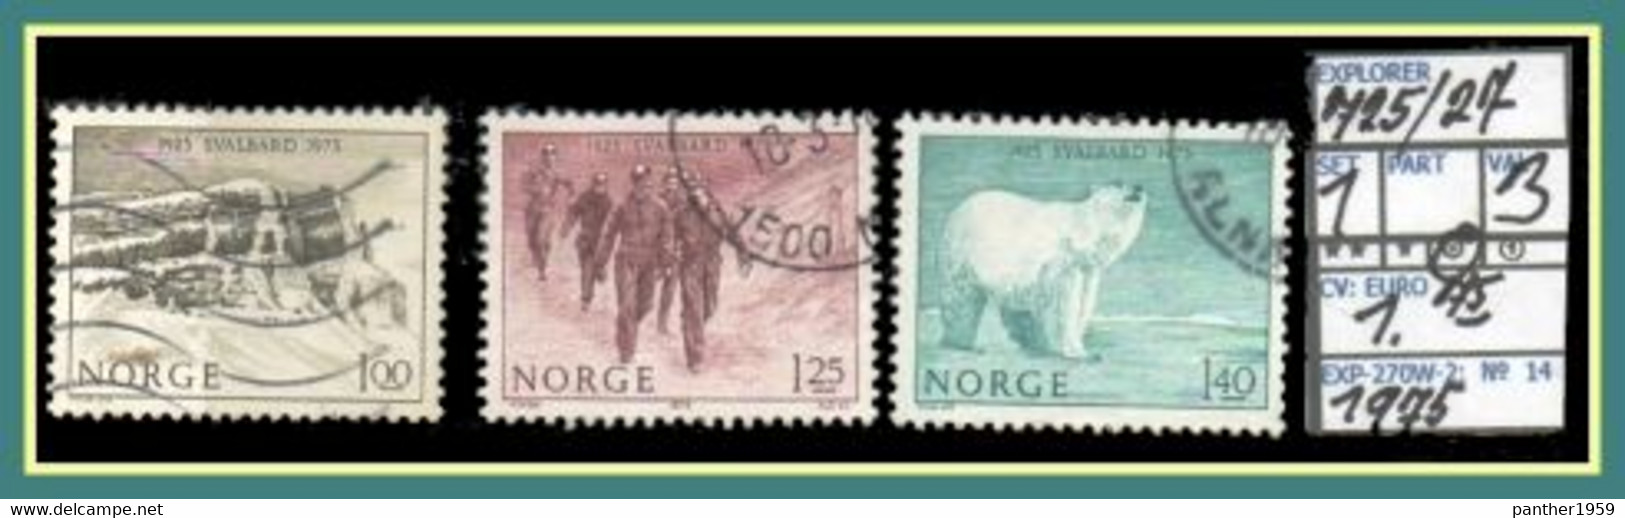 EUROPE>NORWAY##EXPLORING- ARTIC-POLAR#SEA# MNH** (EXP-270W-2 (14) - Arctic Wildlife